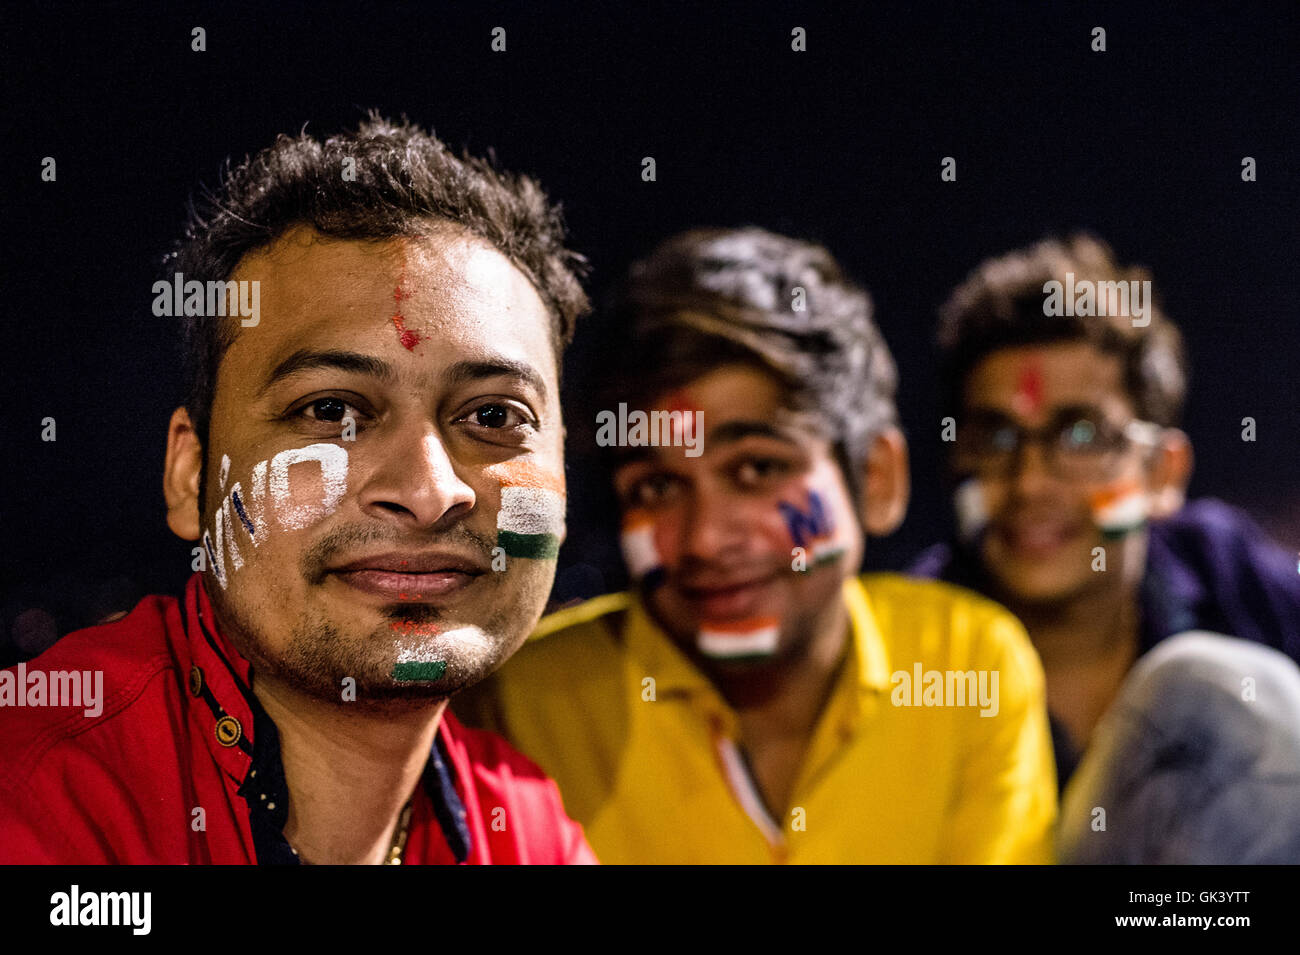 Three Indian men pose for a photograph after India plays cricket in Mumbai India  Credit: Euan Cherry Stock Photo